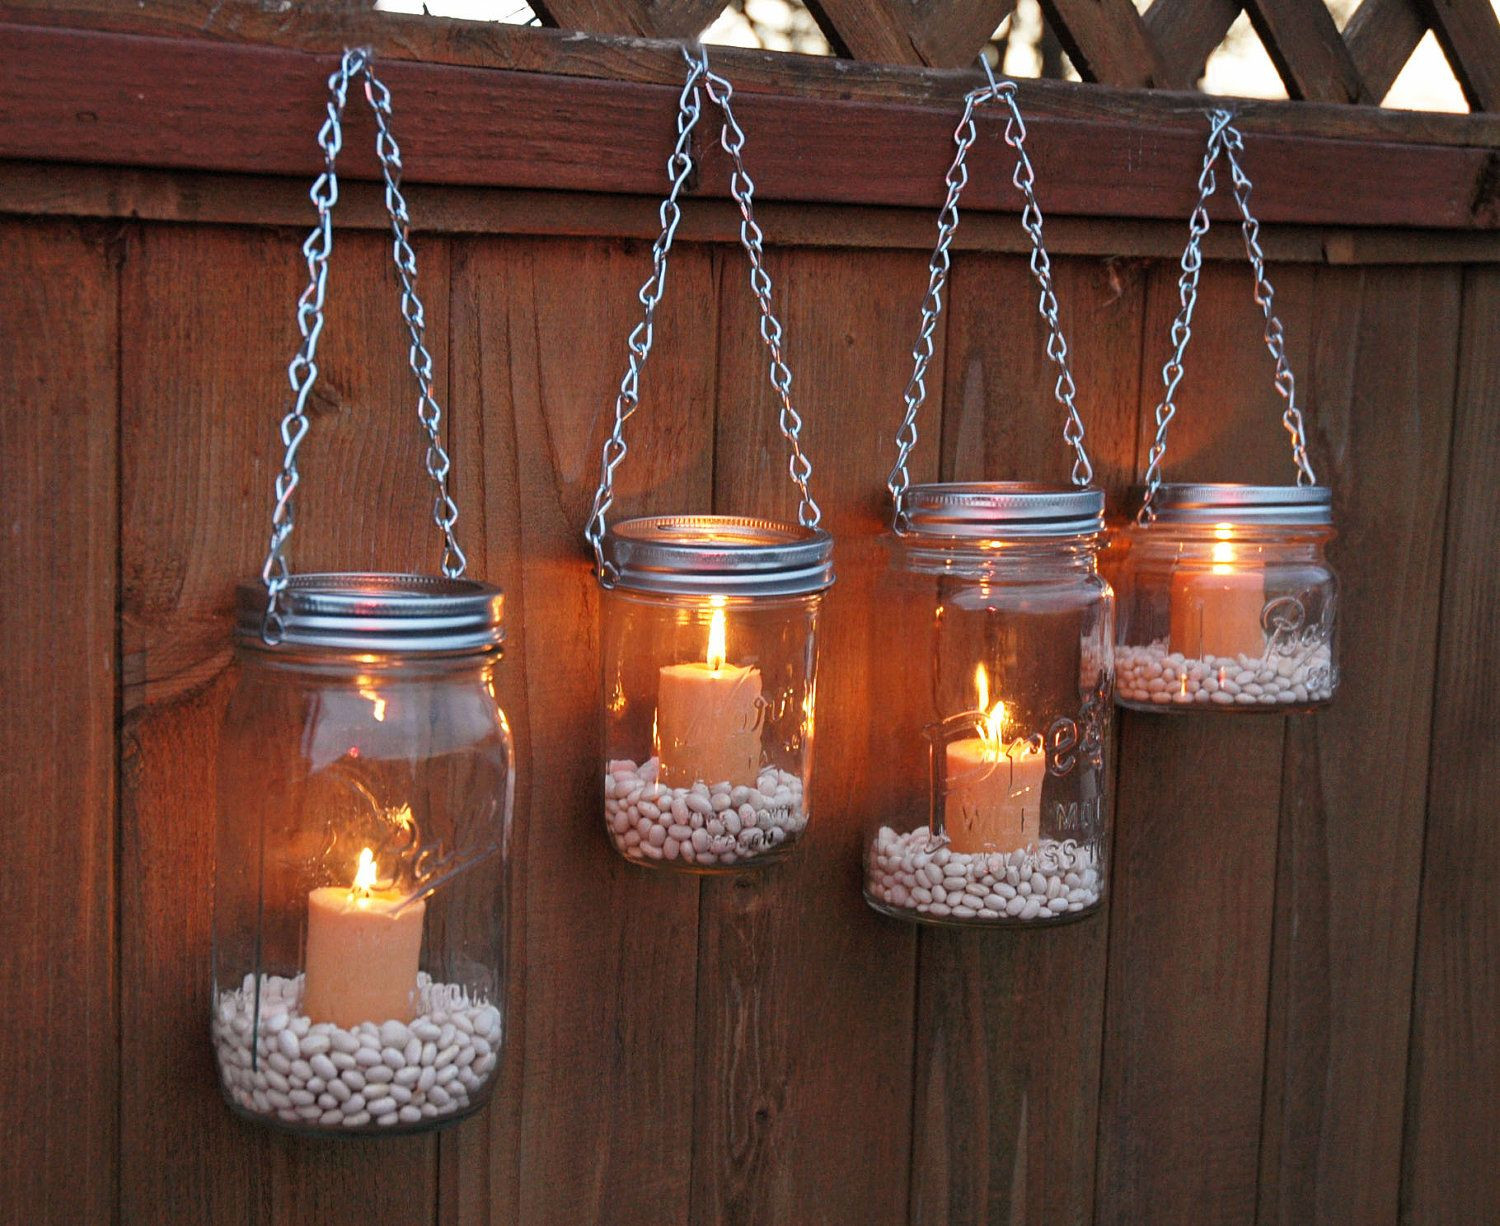 DIY Mason Jar Outdoor Lights
 Hanging Mason Jar Garden Lights DIY Lids Set by